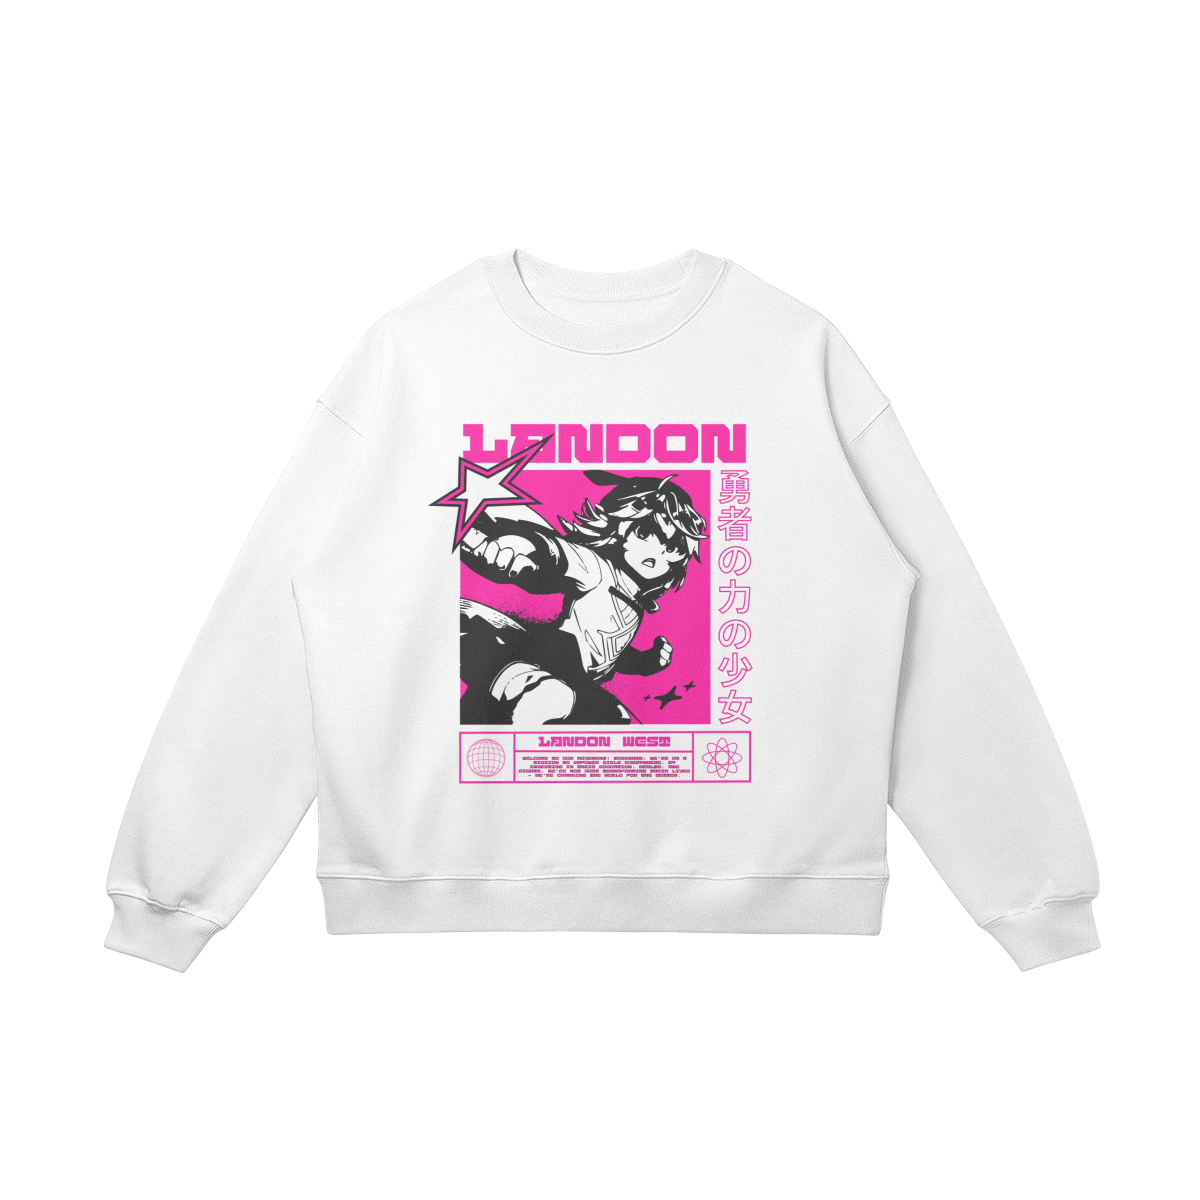 Landon West® Graphic Sweatshirt